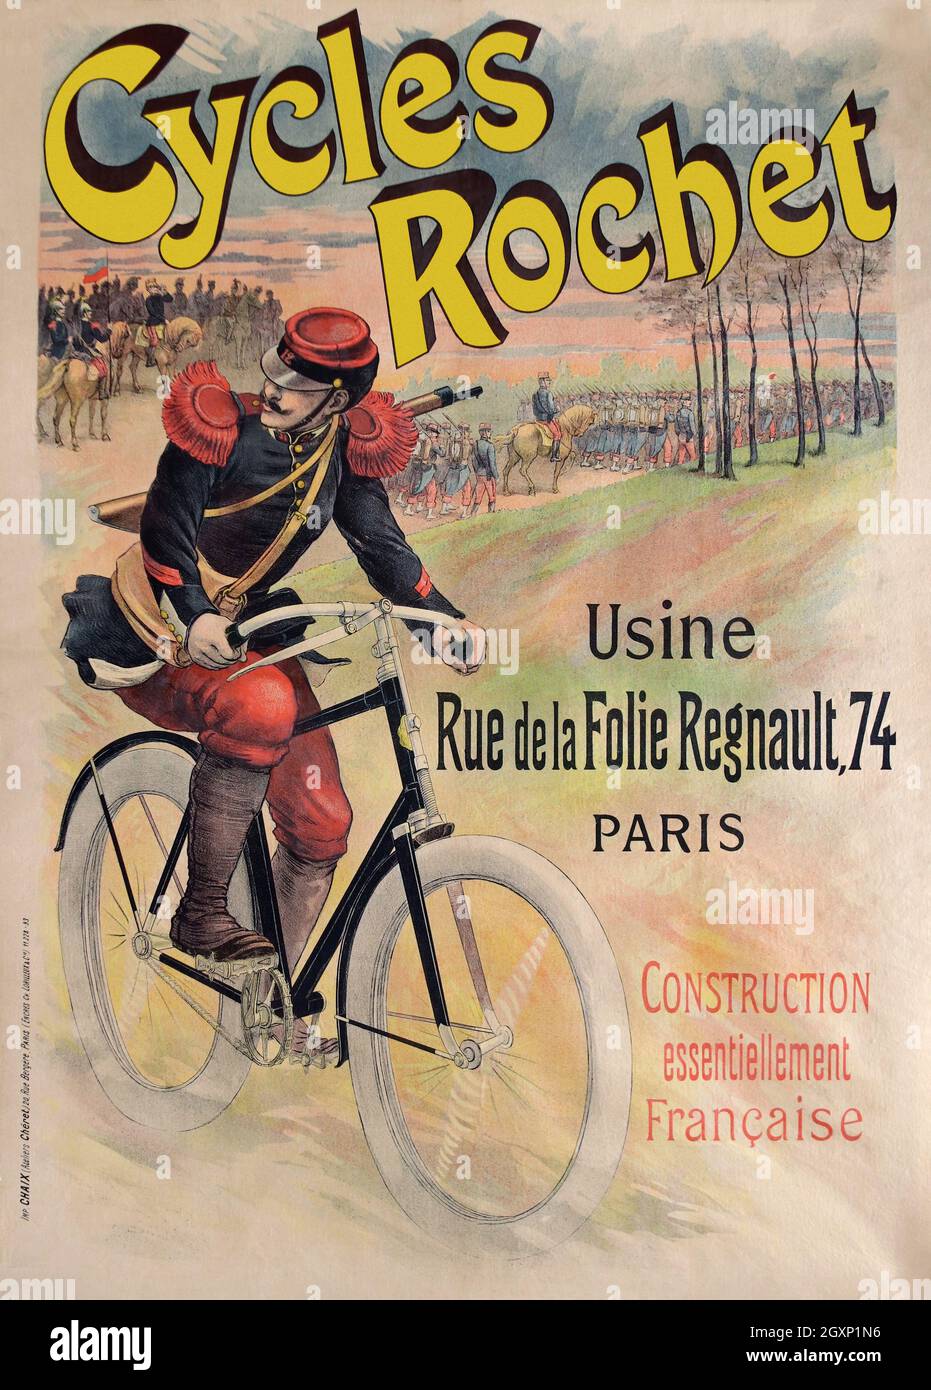 Cycles Rochet - Construction essentiellement Jean-Bel Foto Stock